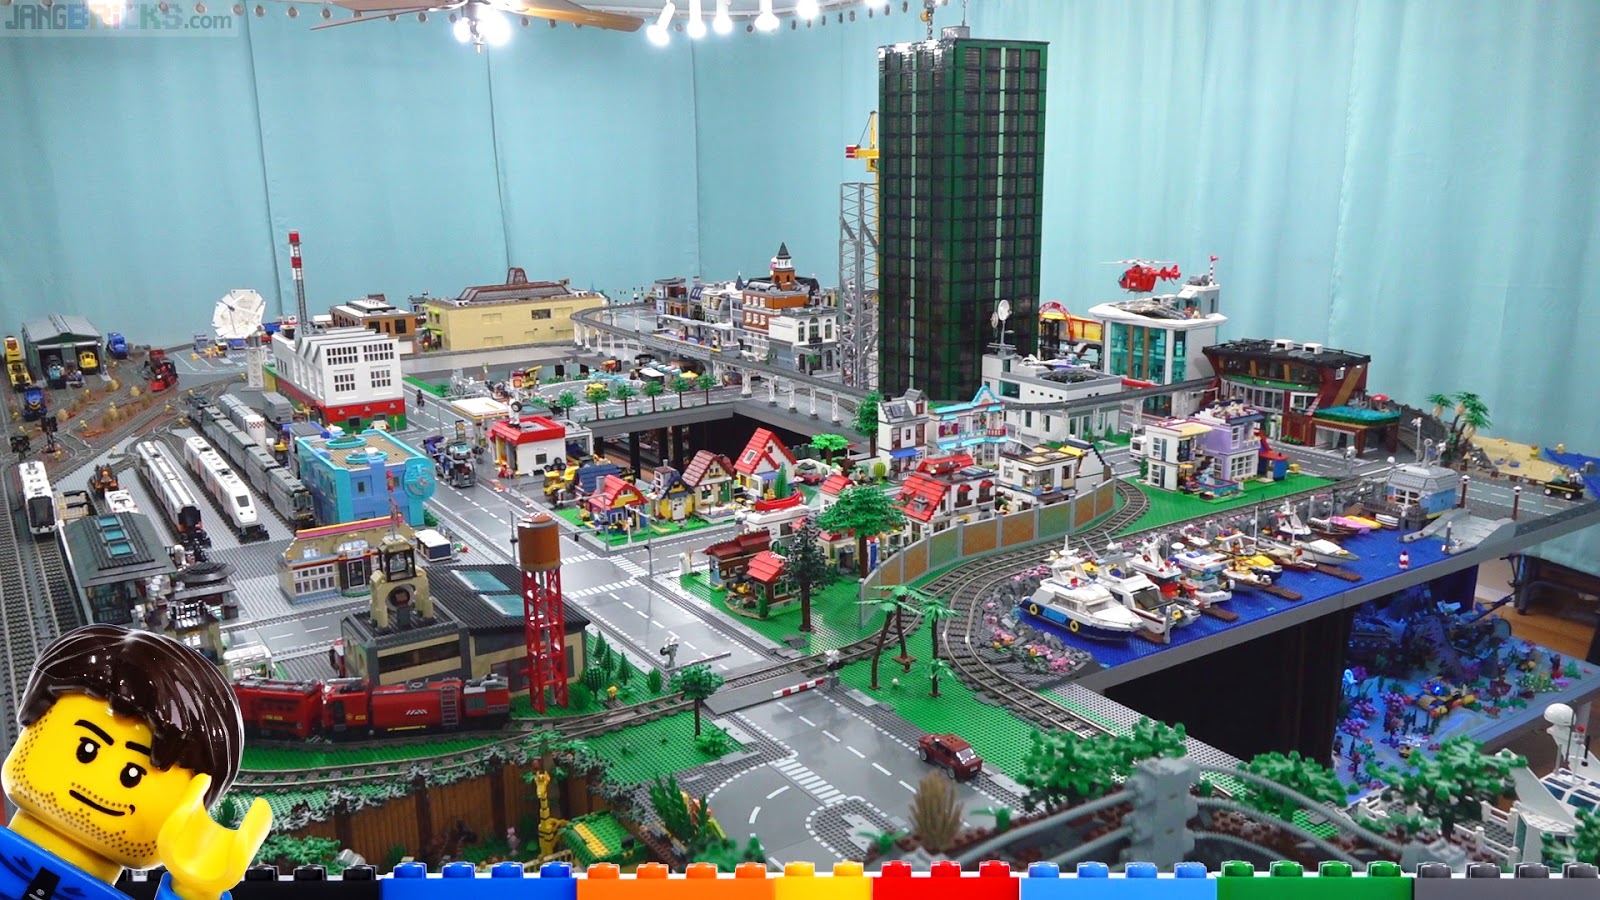 JANGBRiCKS LEGO reviews & my LEGO City, the sky rising